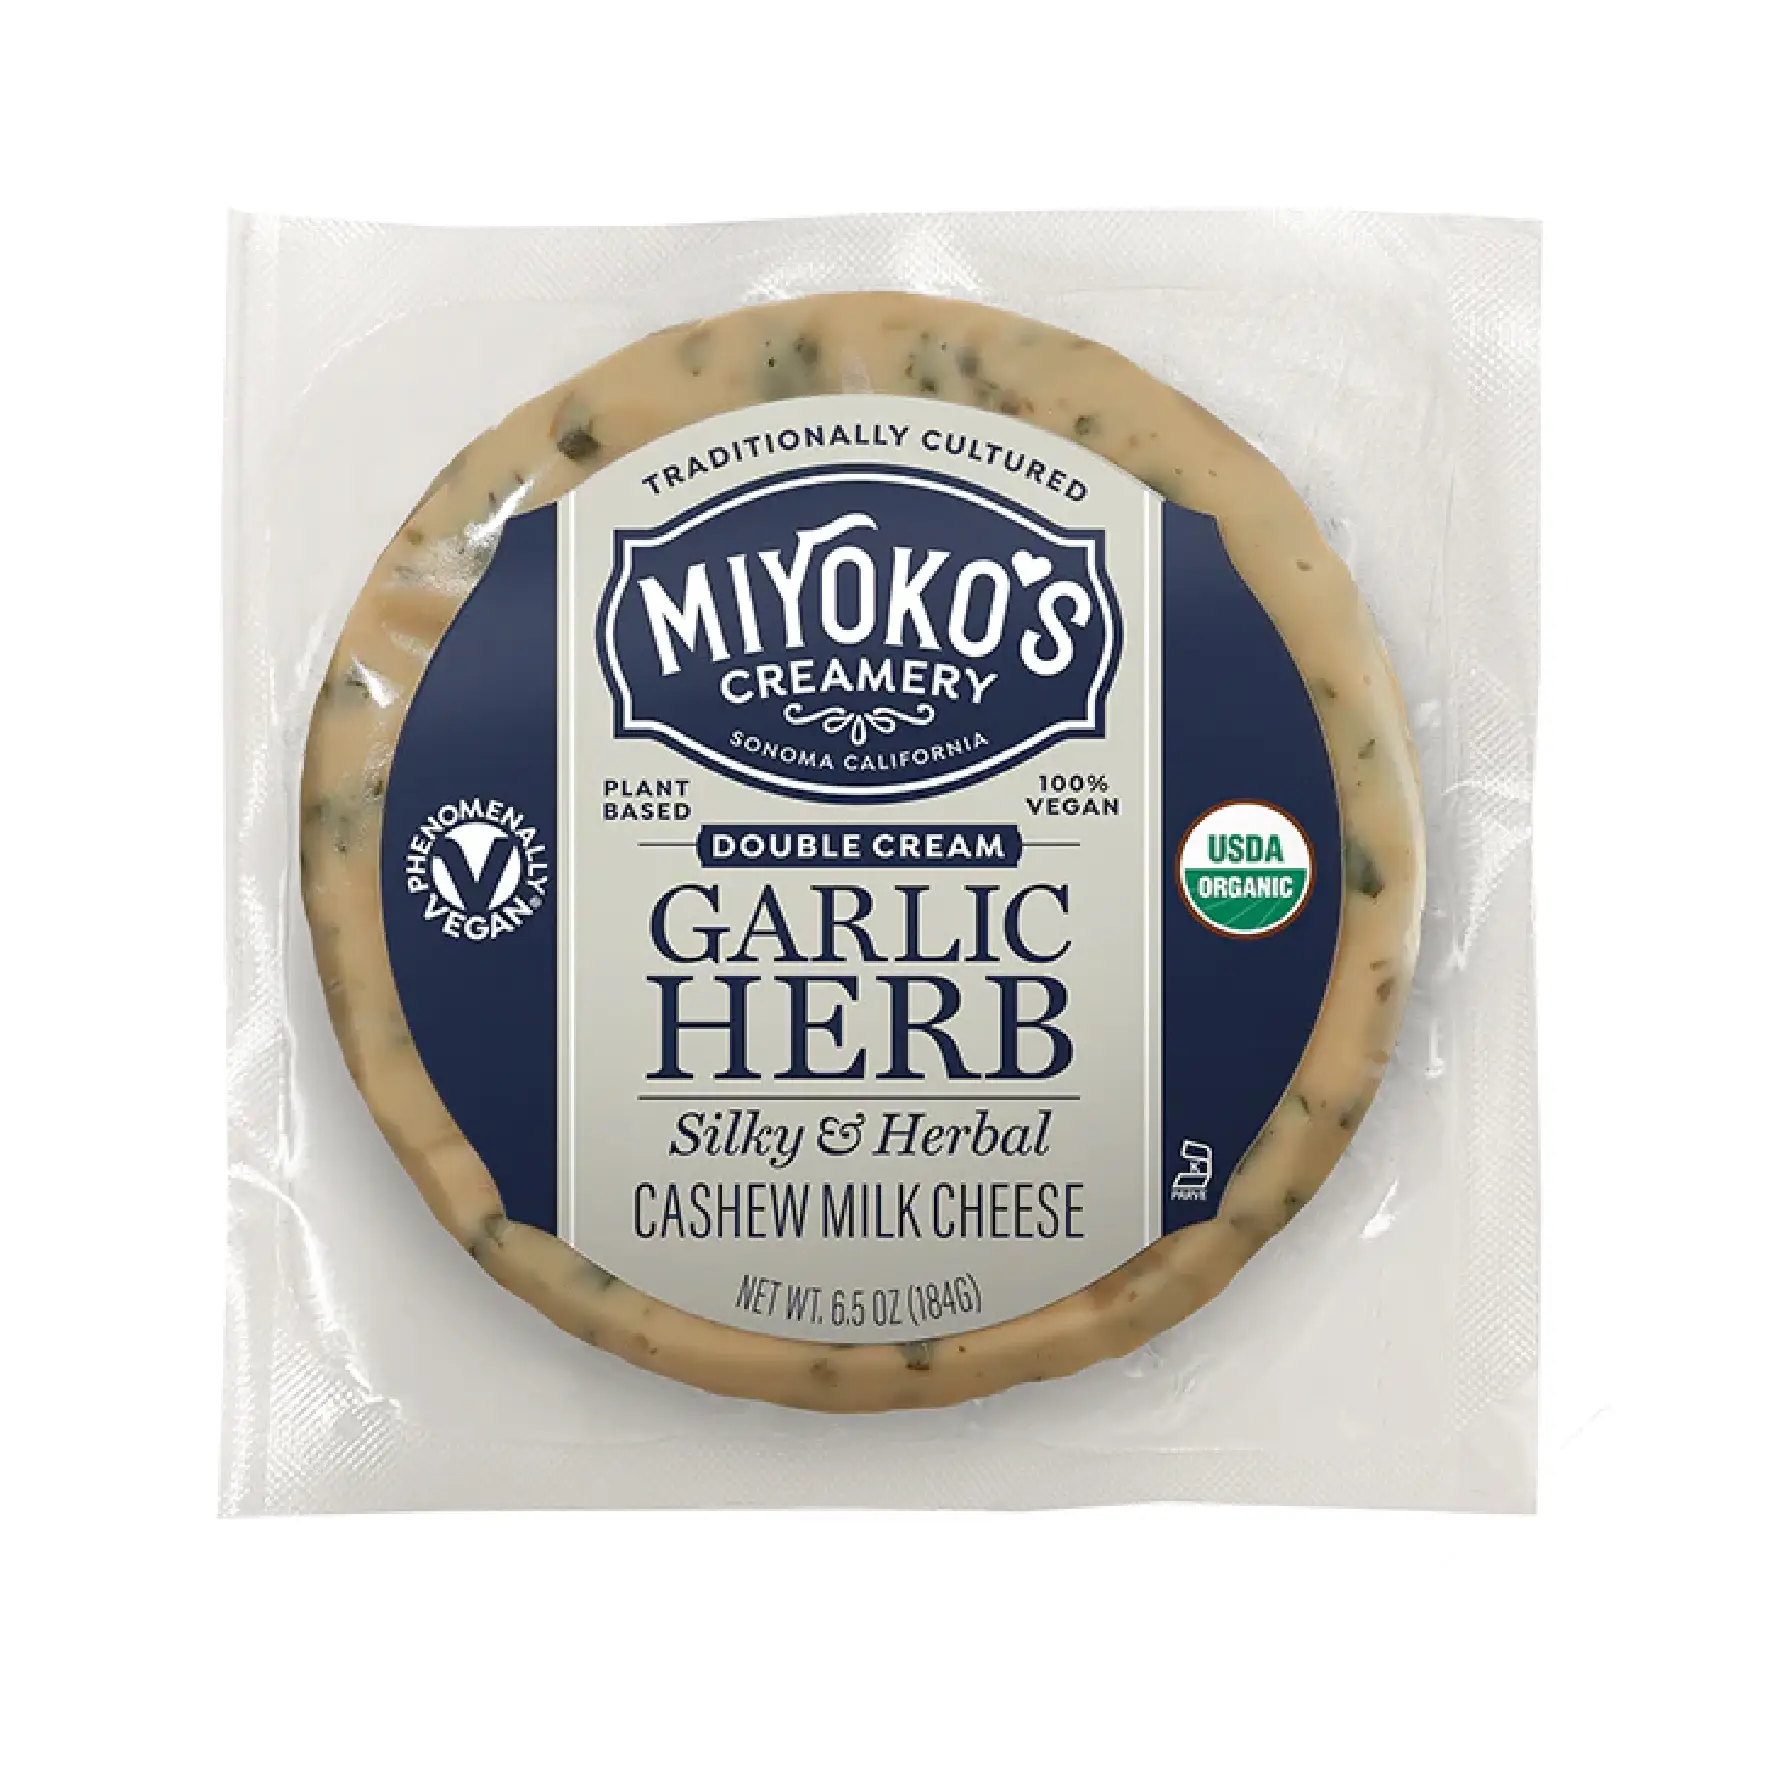 Double Cream Garlic Herb Cashew Milk Cheese Delivery